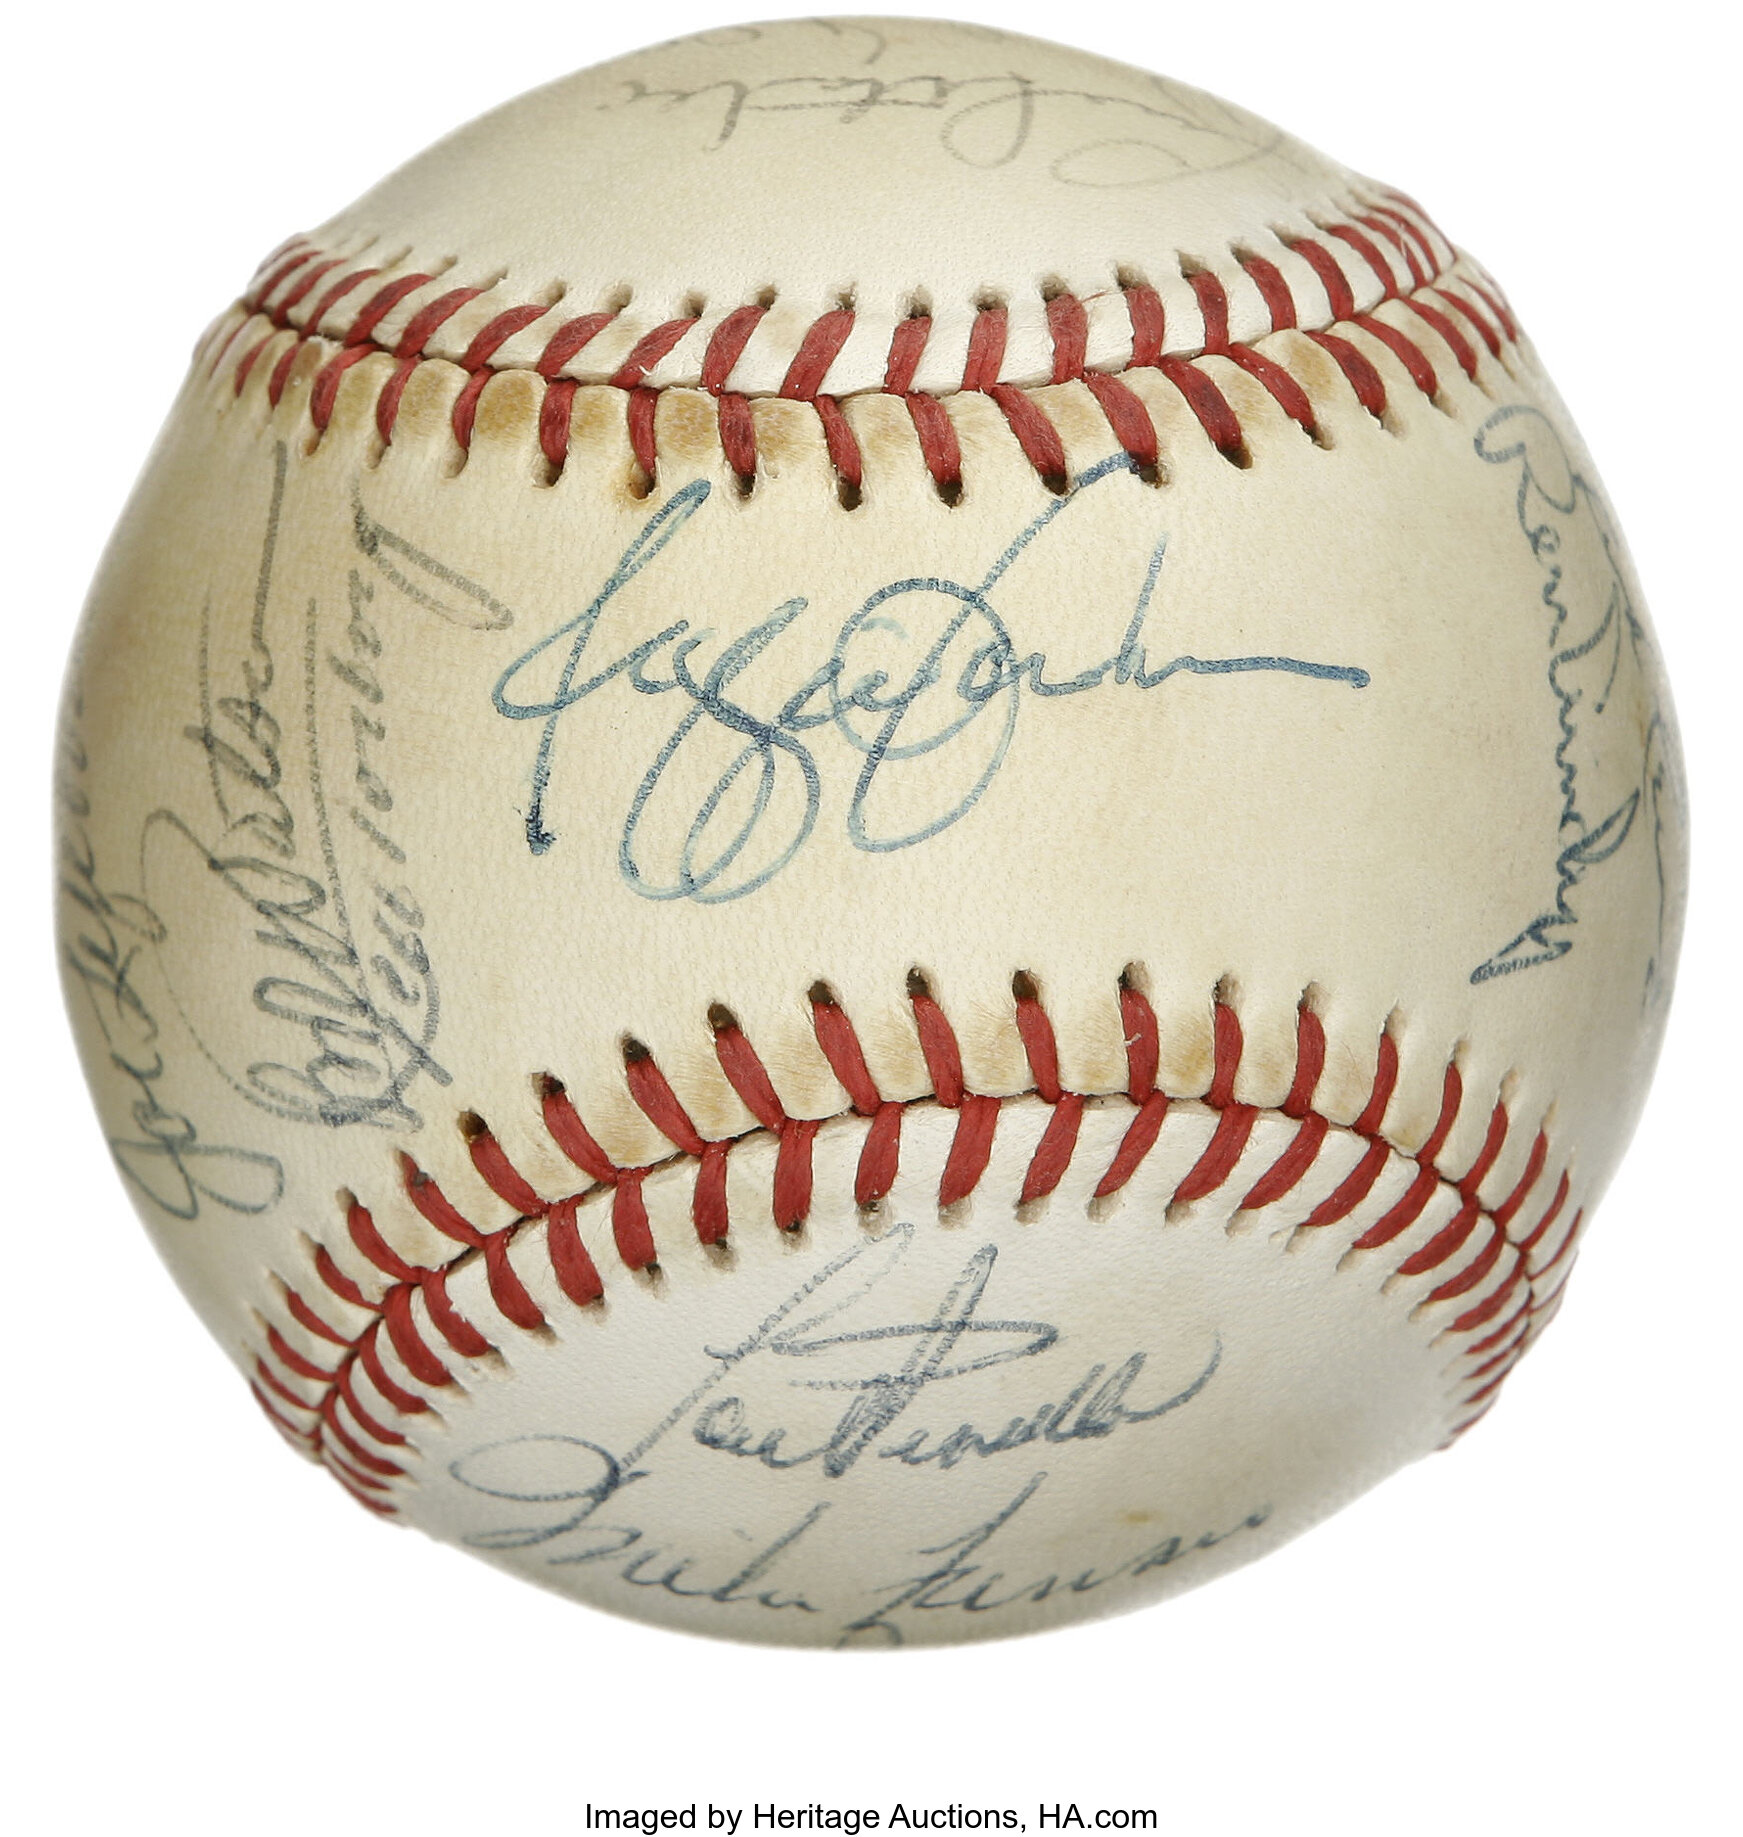 Autograph Warehouse 365336 Luis Tiant Autographed Baseball Card